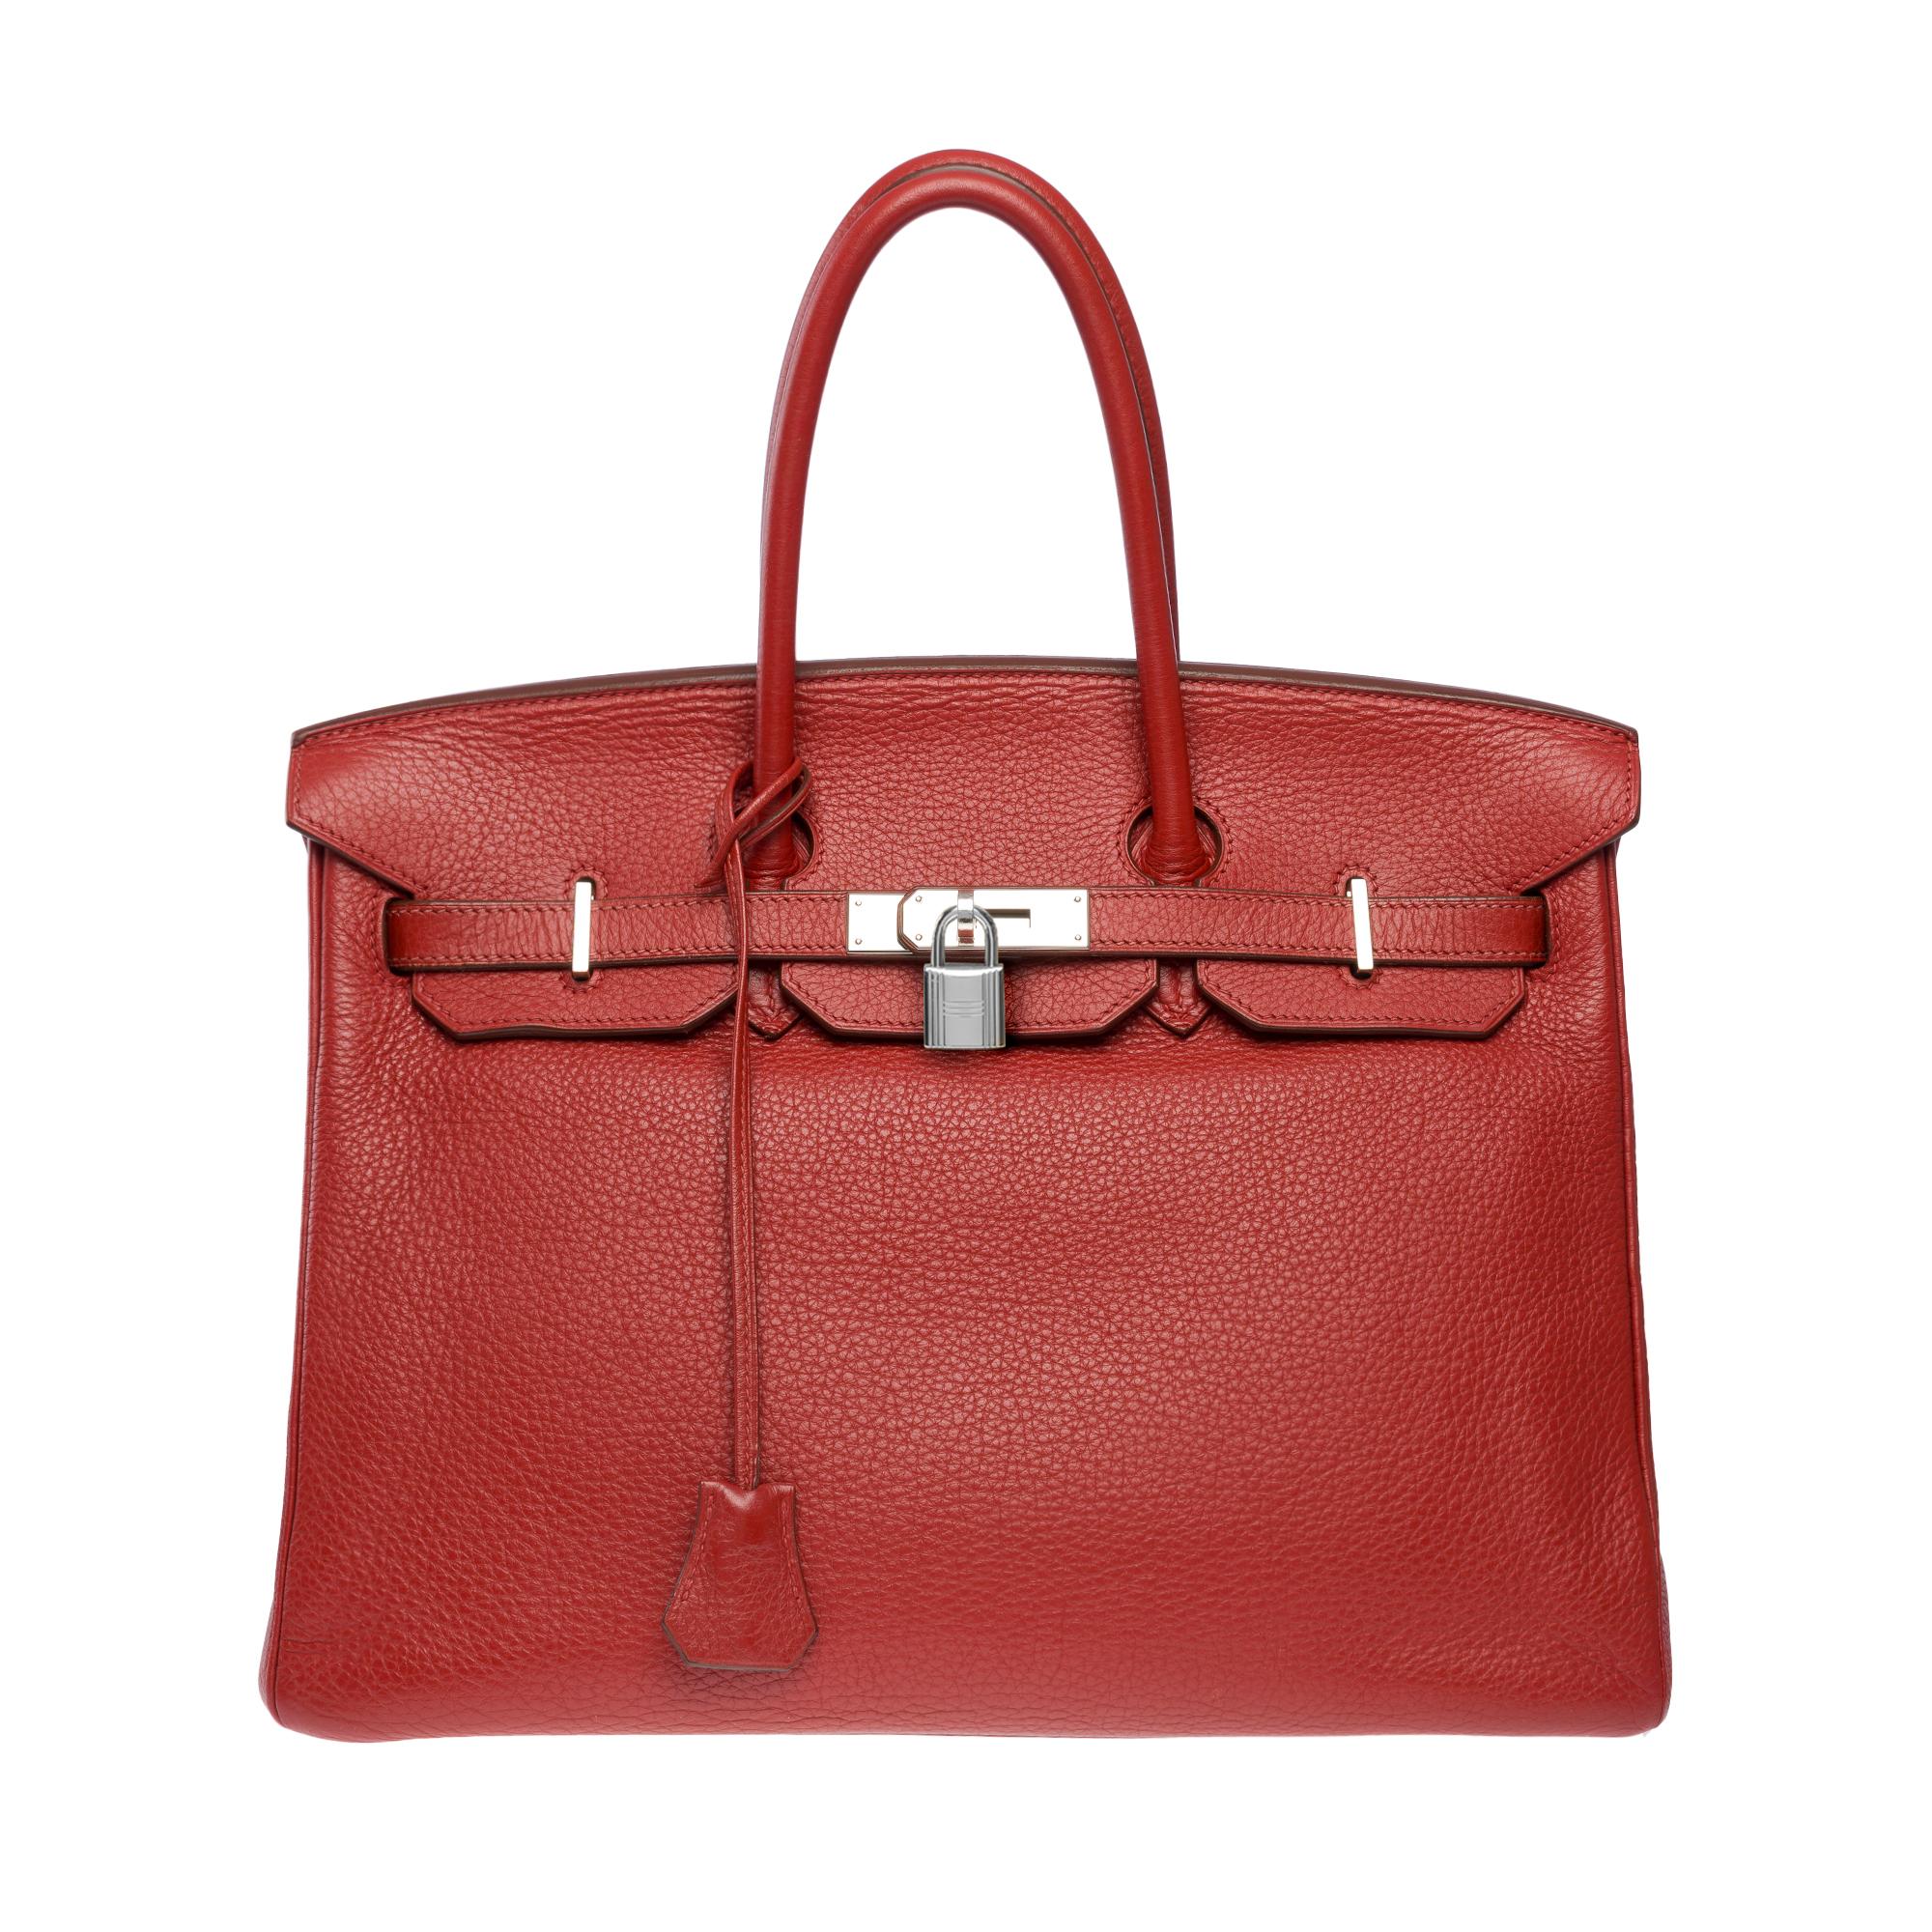 Women's or Men's Stunning Hermès Birkin 35 handbag in Sienne Togo leather, SHW For Sale